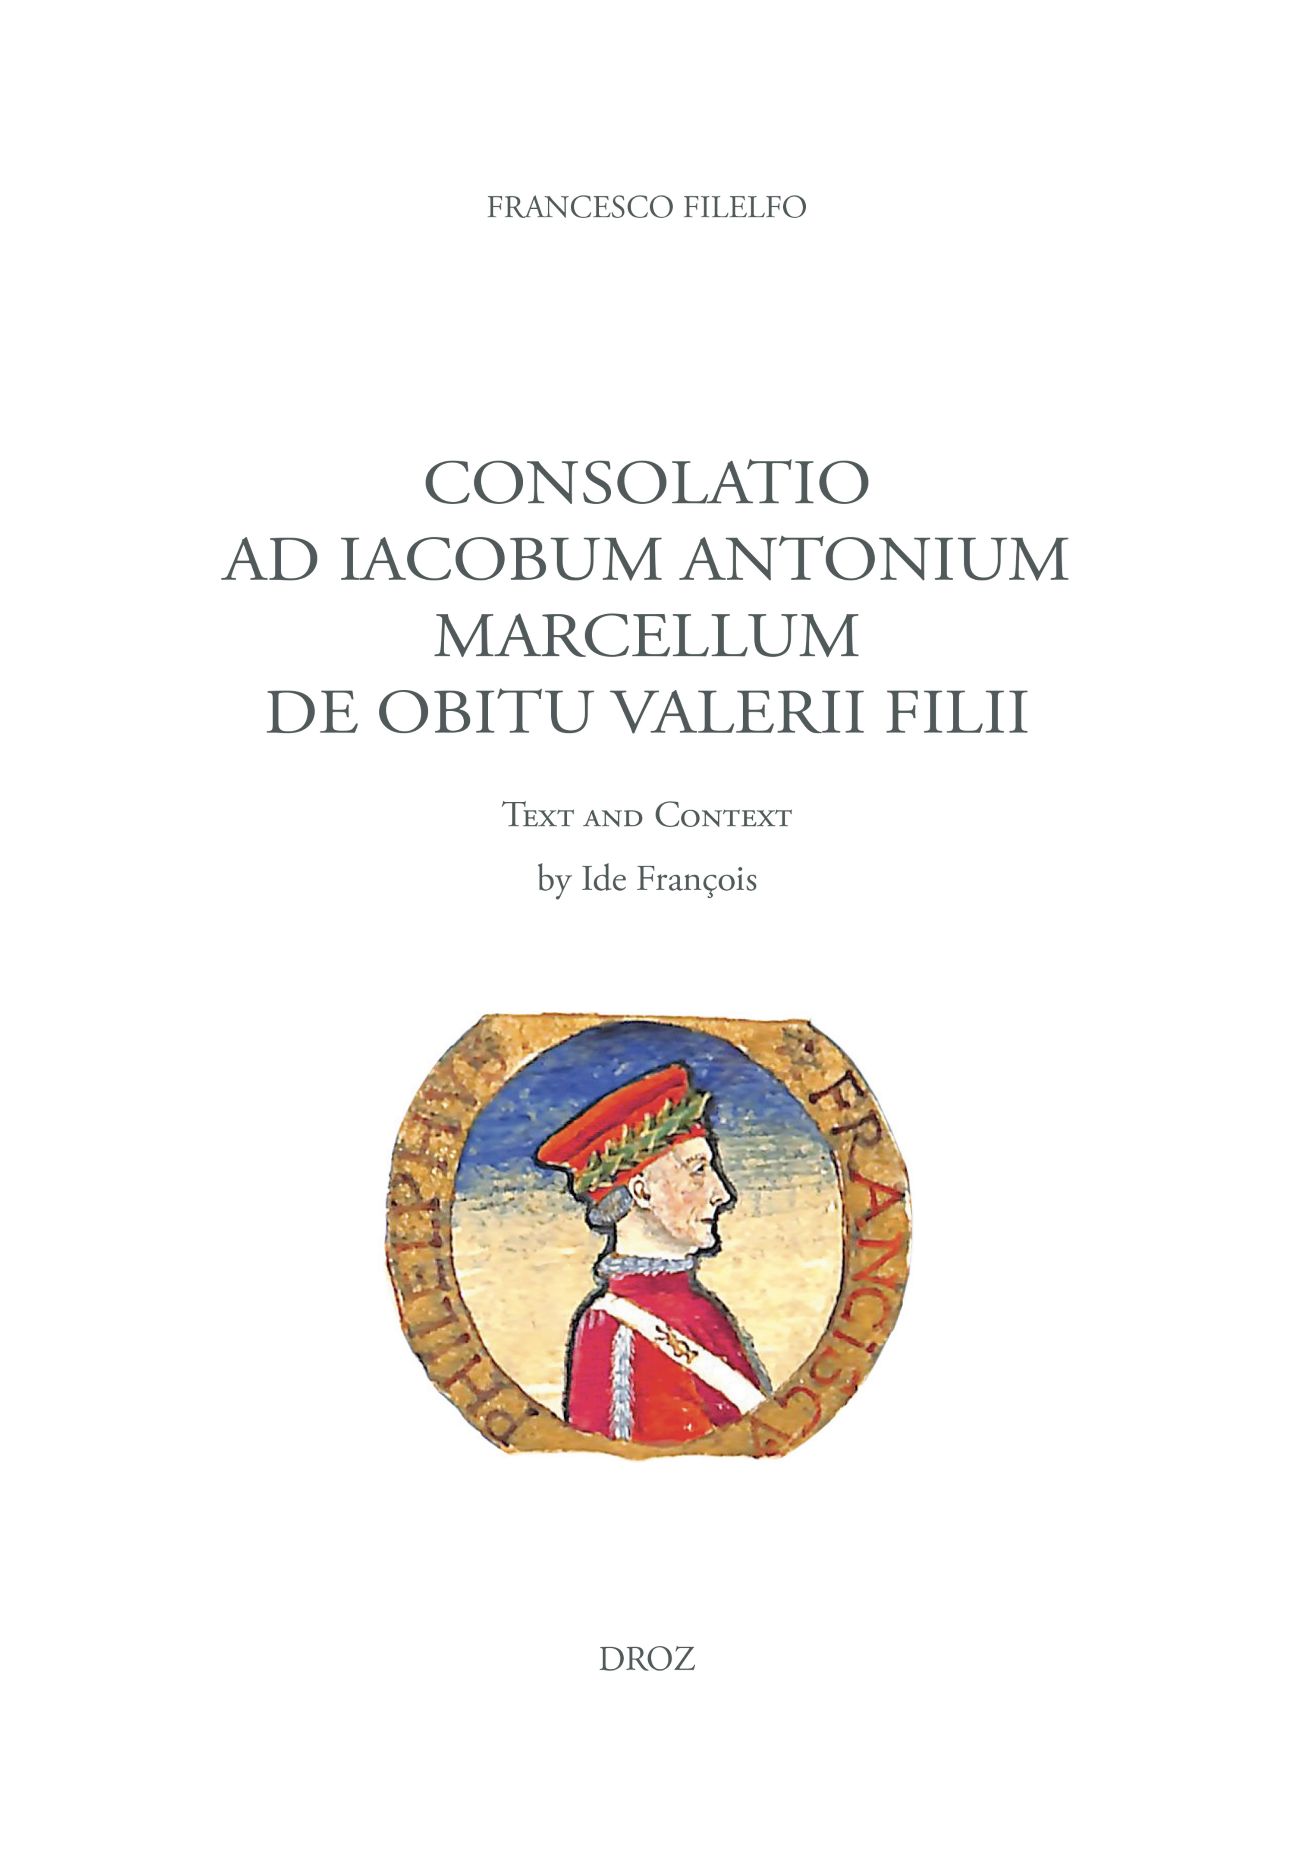 François Philelphe, Ide François (éd. et trad.), Consolatio ad lacobum Antonium Marcellum de obitu Valeri filii. Text and context